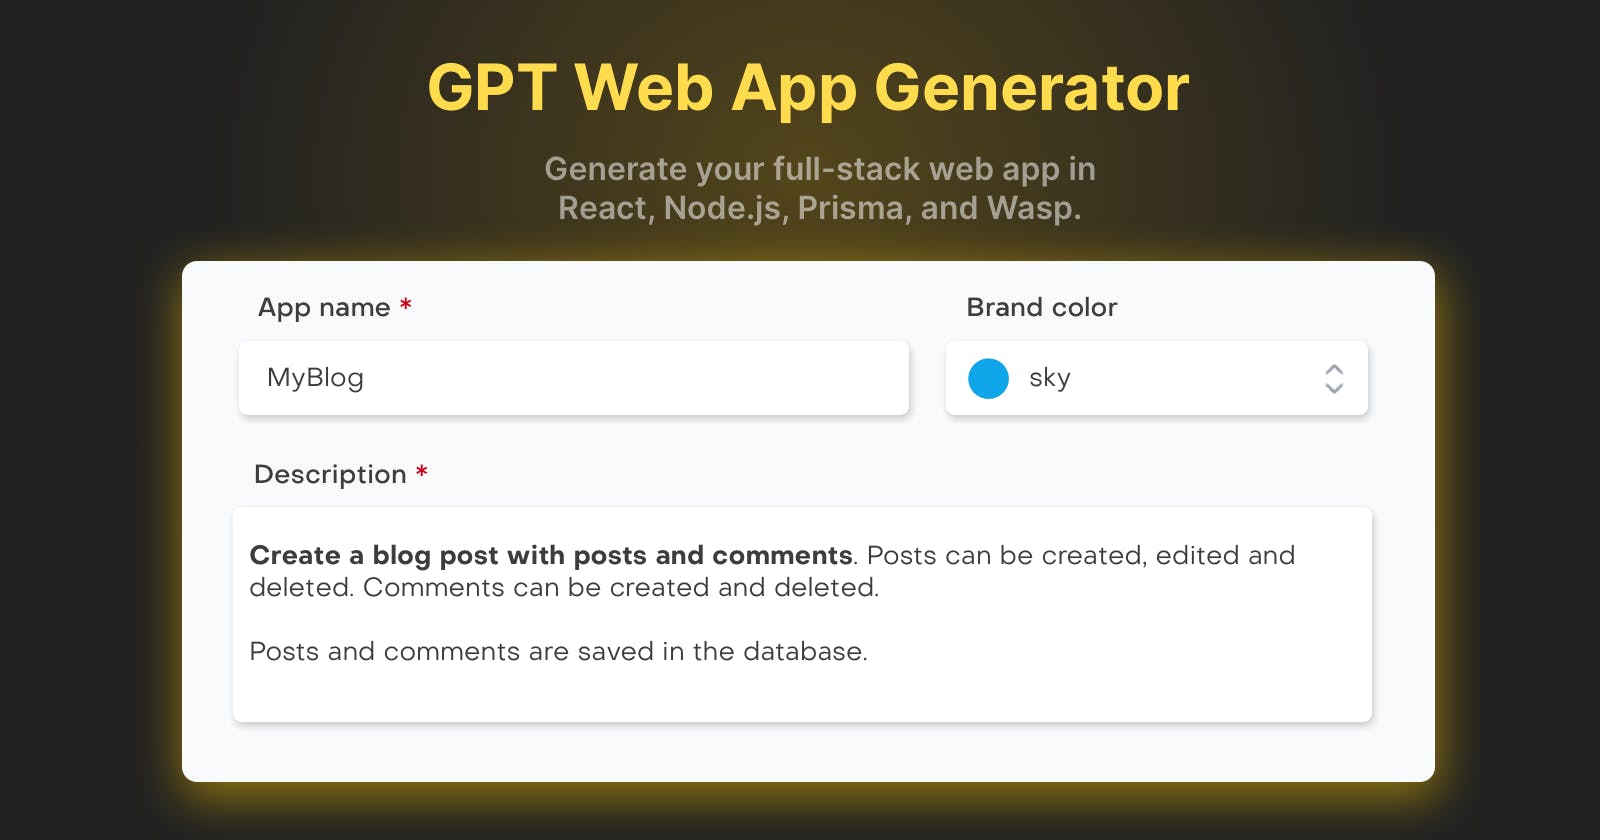 GPT Web App Generator - Let AI create a full-stack React & Node.js codebase based on your description 🤖🤯